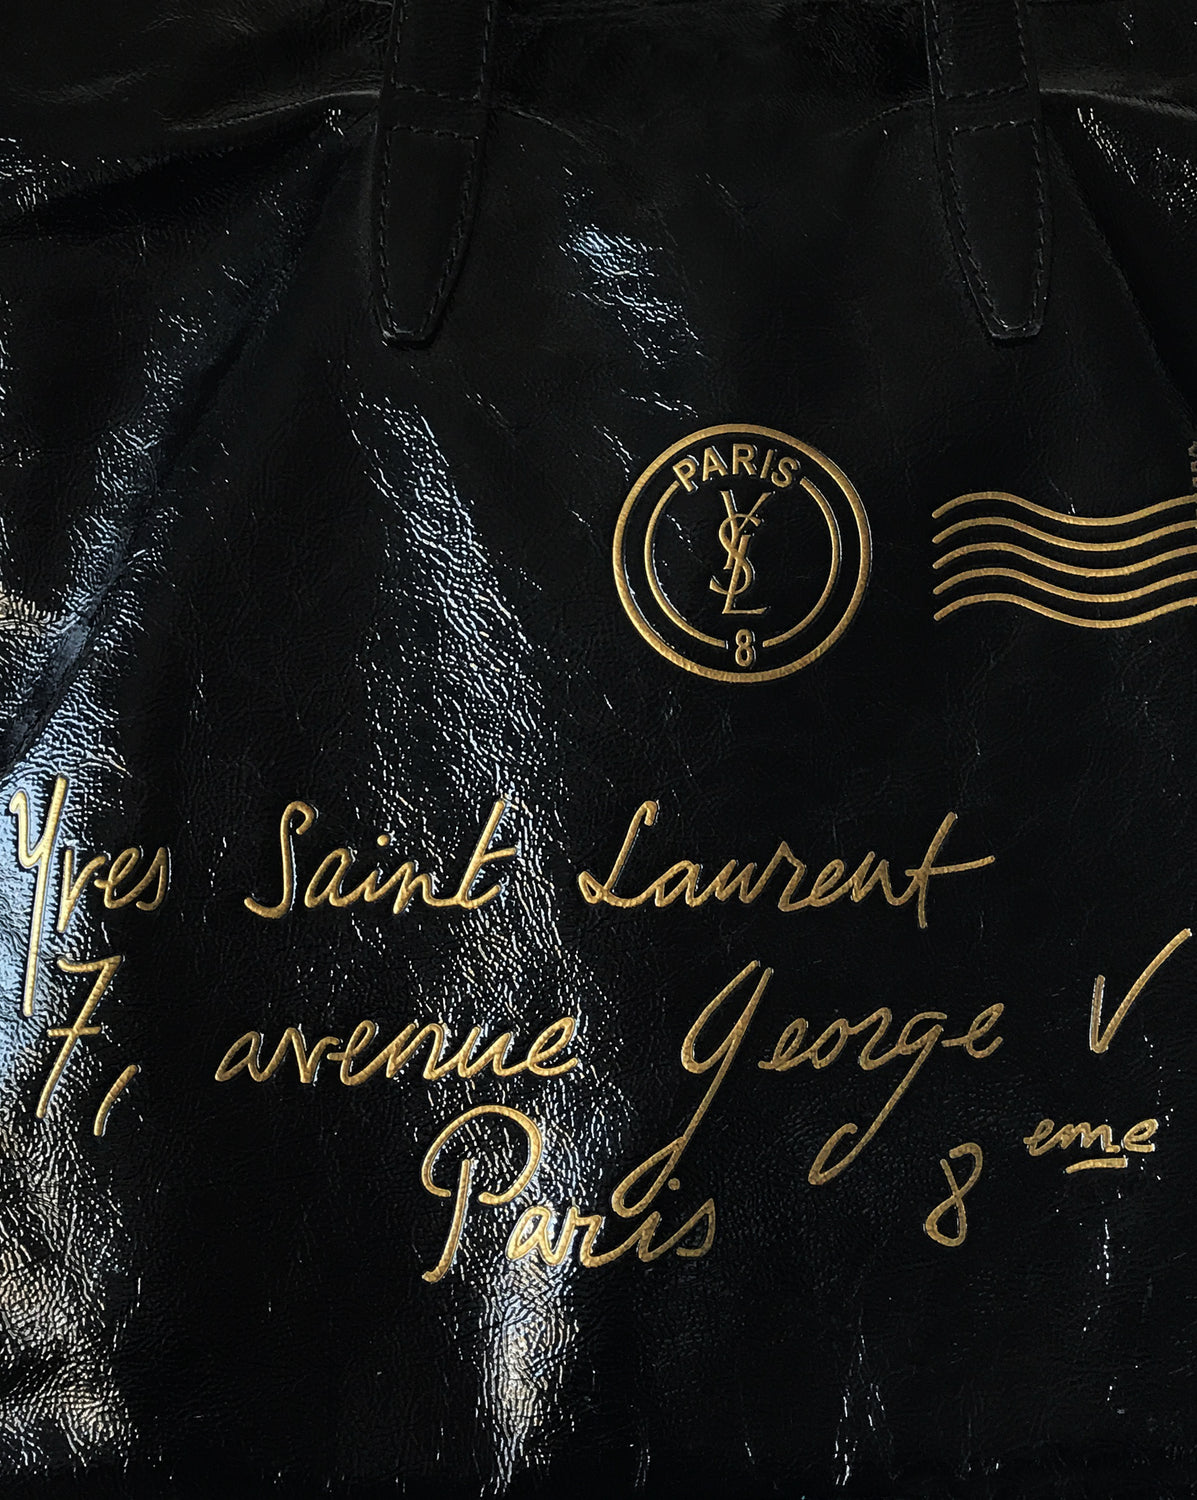 1987 SHOP Vintage Yves Saint Laurent black Patent Leather Y-Mail Tote handbag